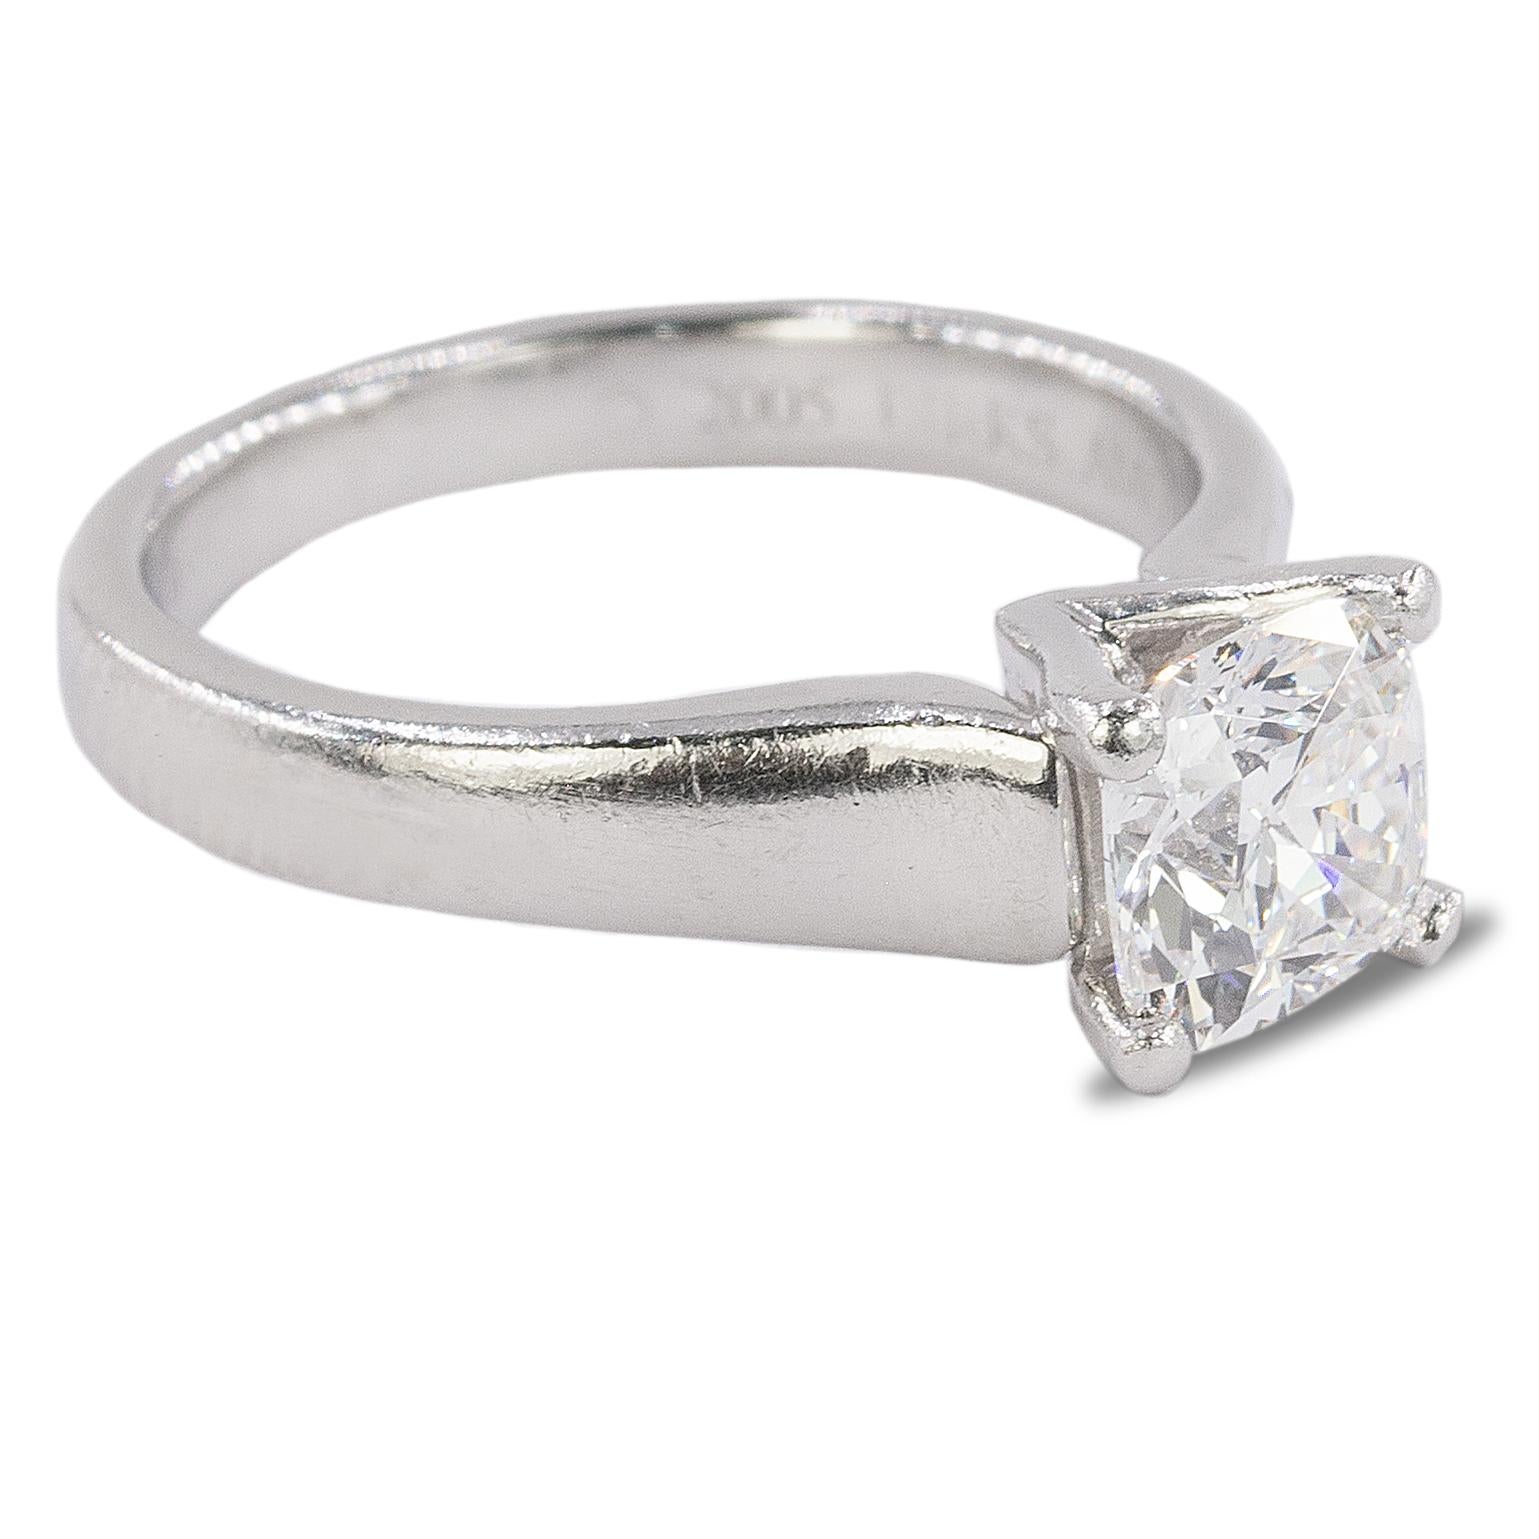 Platinum Ring with GIA certified 1.04 carat E color VVS1 Cushion Cut Diamond